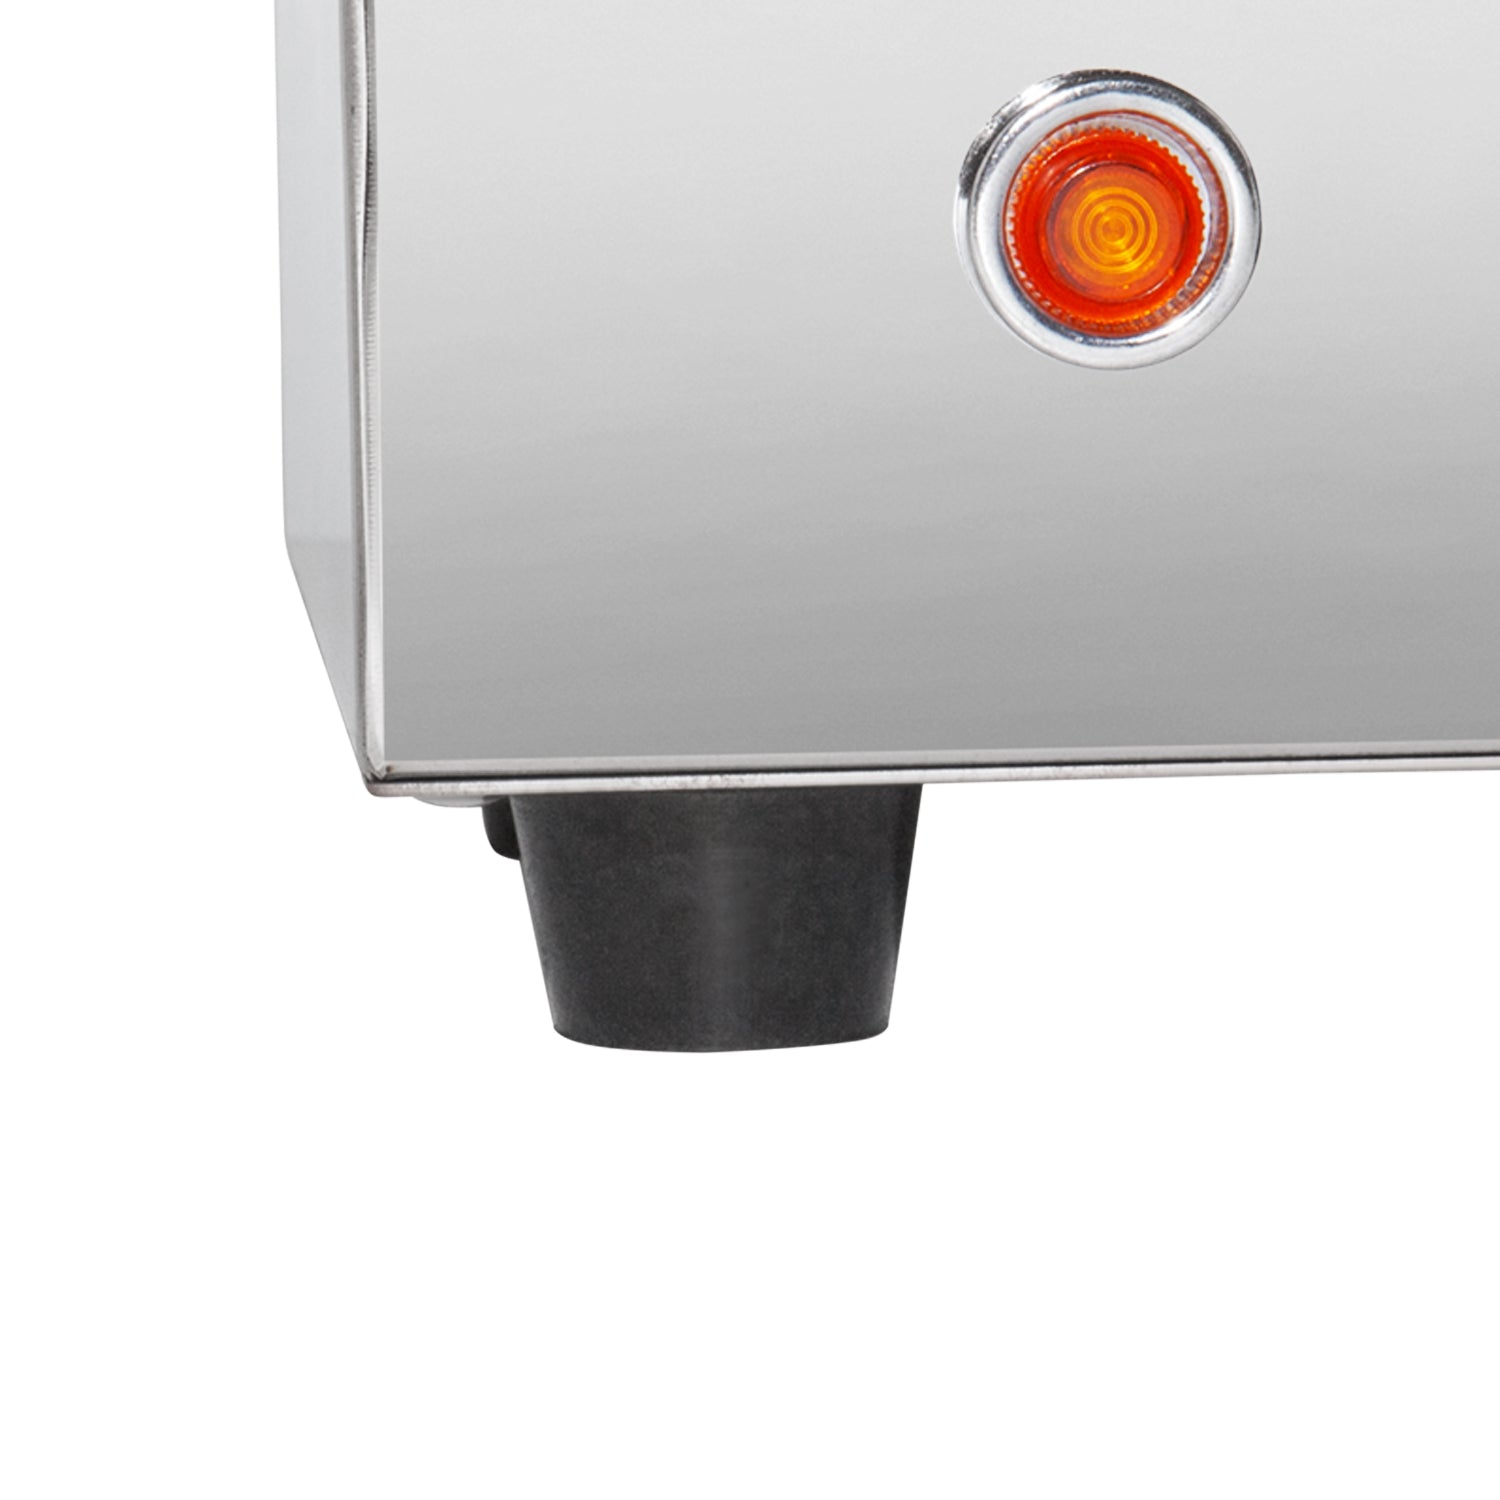 ALDKitchen Sauce Dispenser | 1-Head Sauce Warmer | Hot Fudge Warmer | 110V, Size: Small